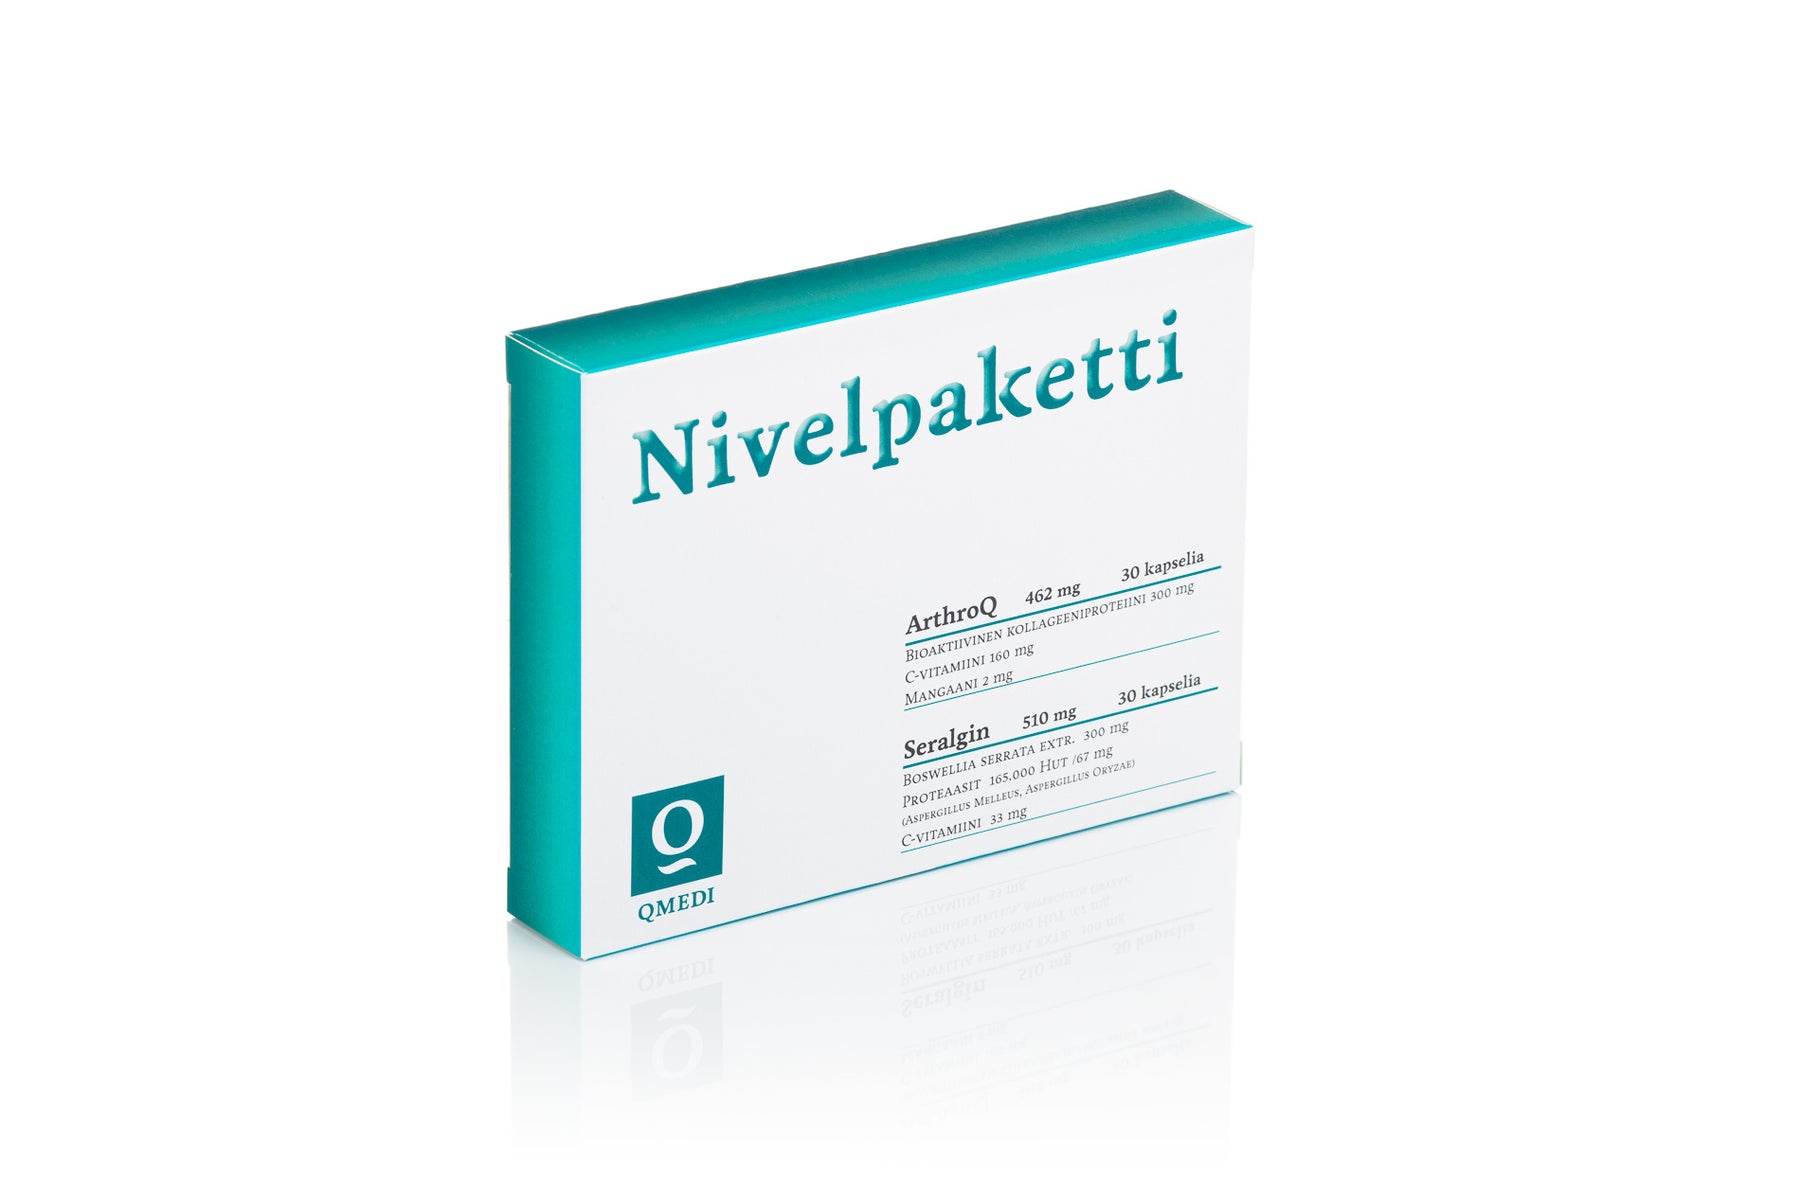 Q Medi Nivelpaketti - ArthroQ 462 mg 30 kaps., Seralgin 510 mg 30 kaps.